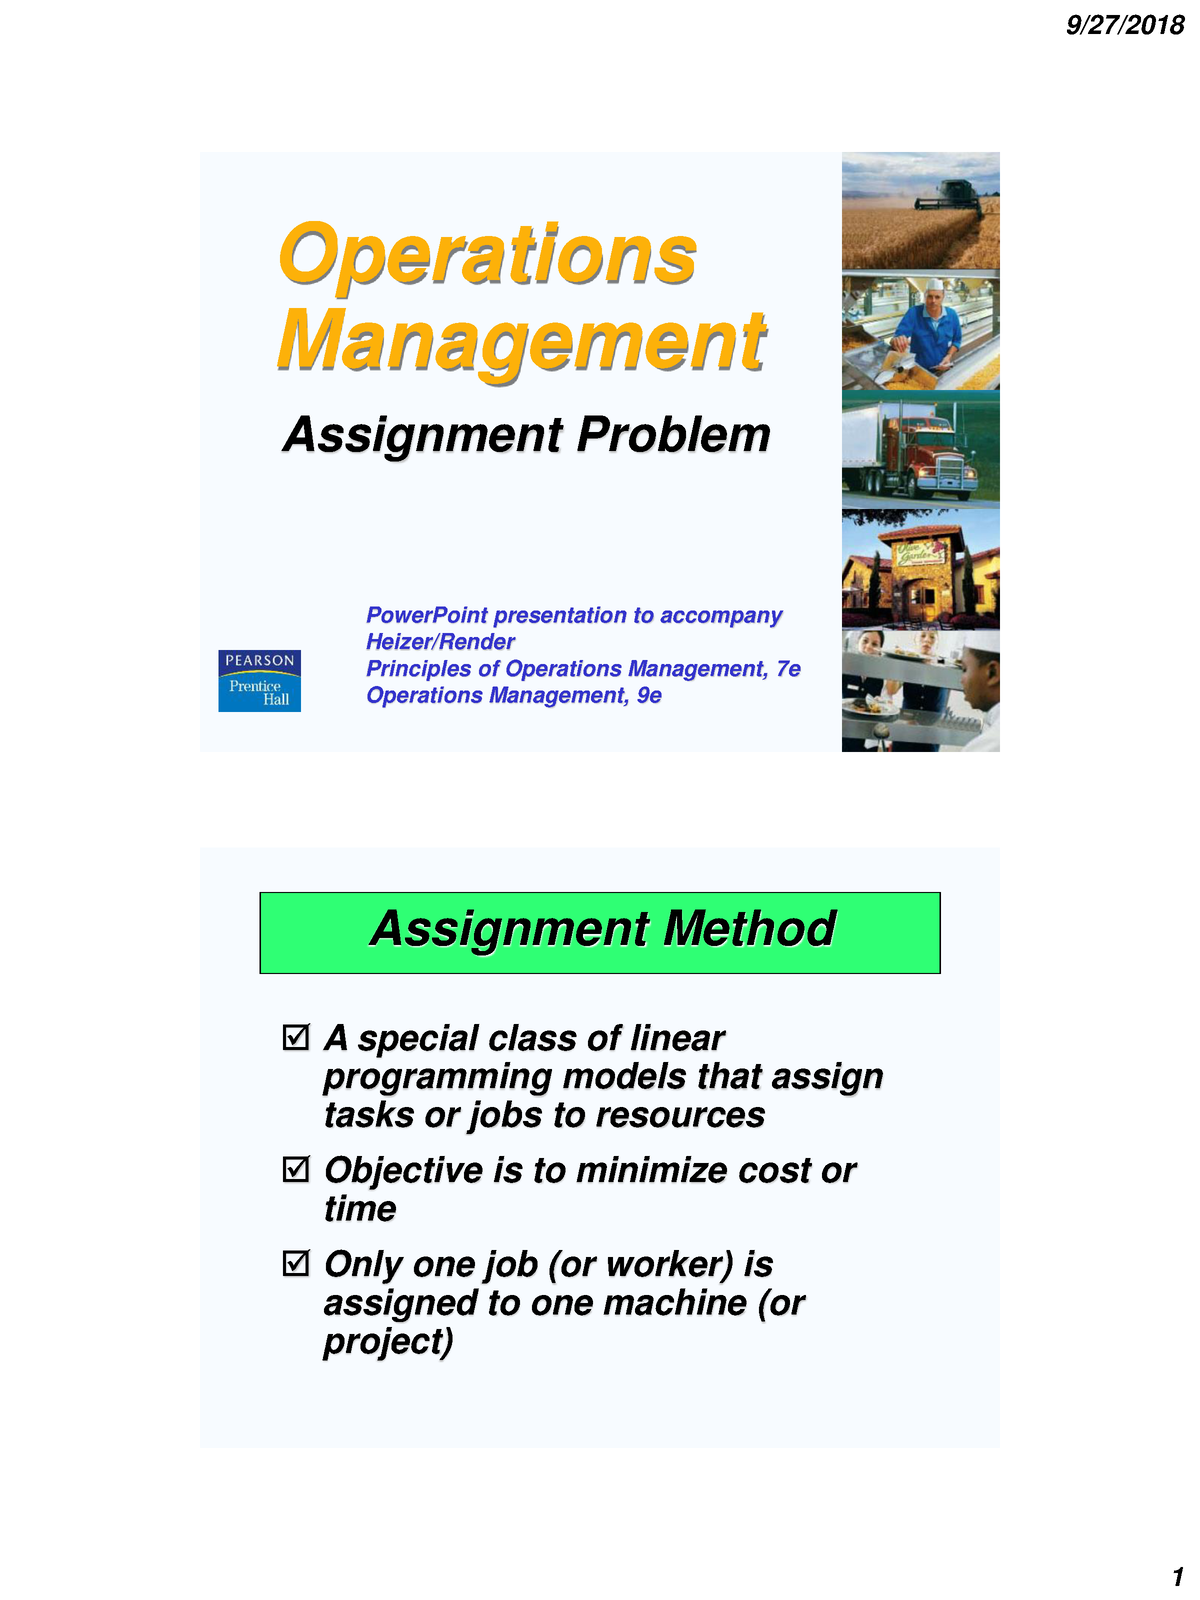 define assignment problem in rmt